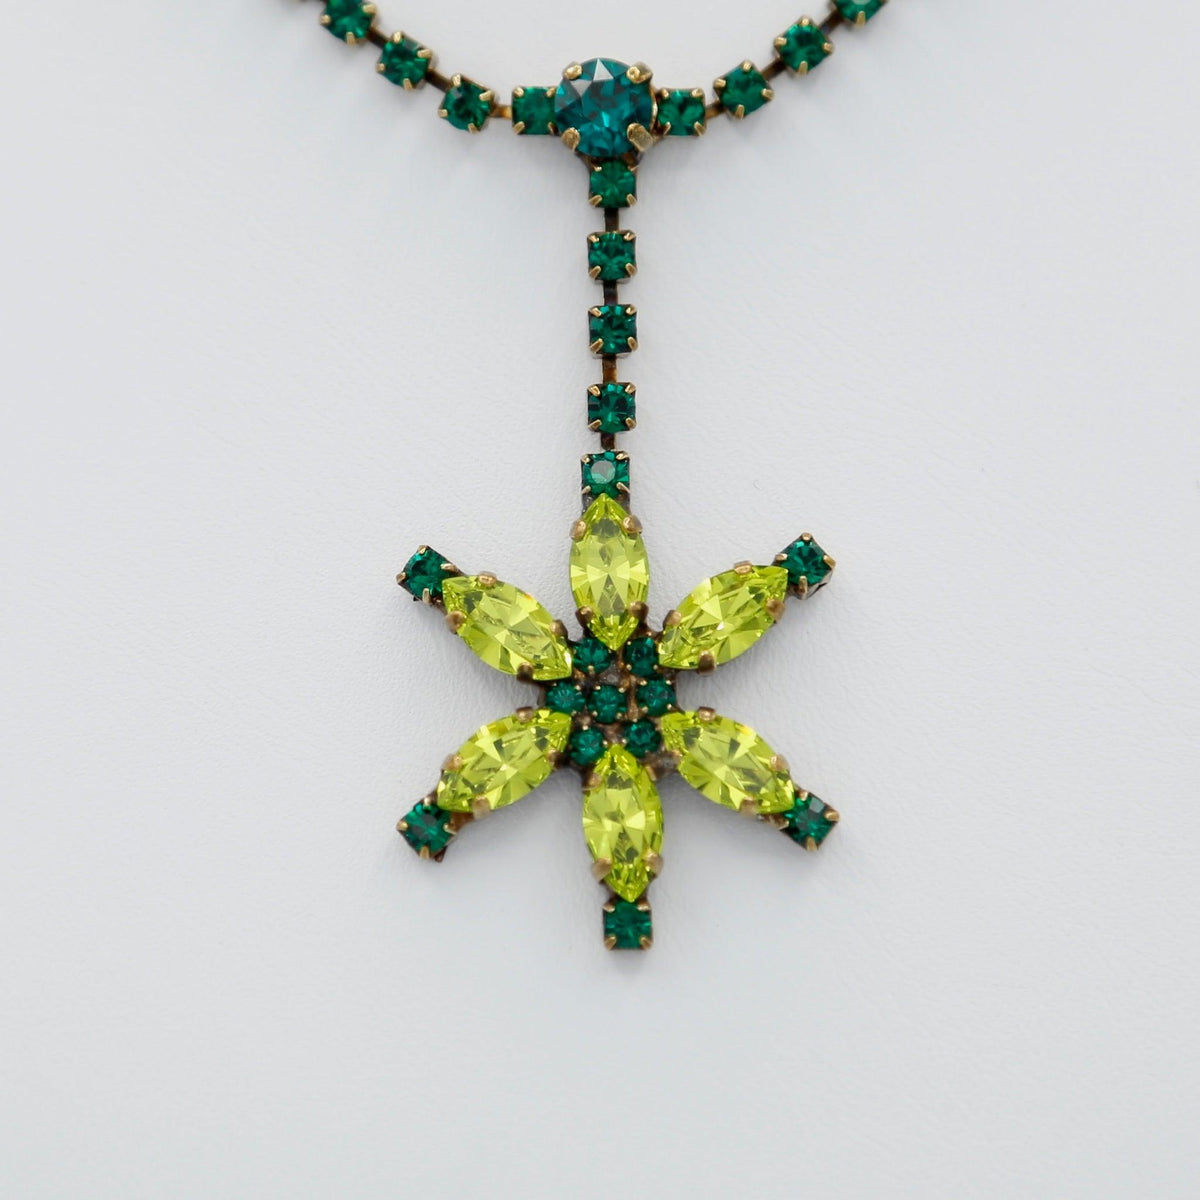 Vita Isola Women's Iconic Gold Bead Necklace